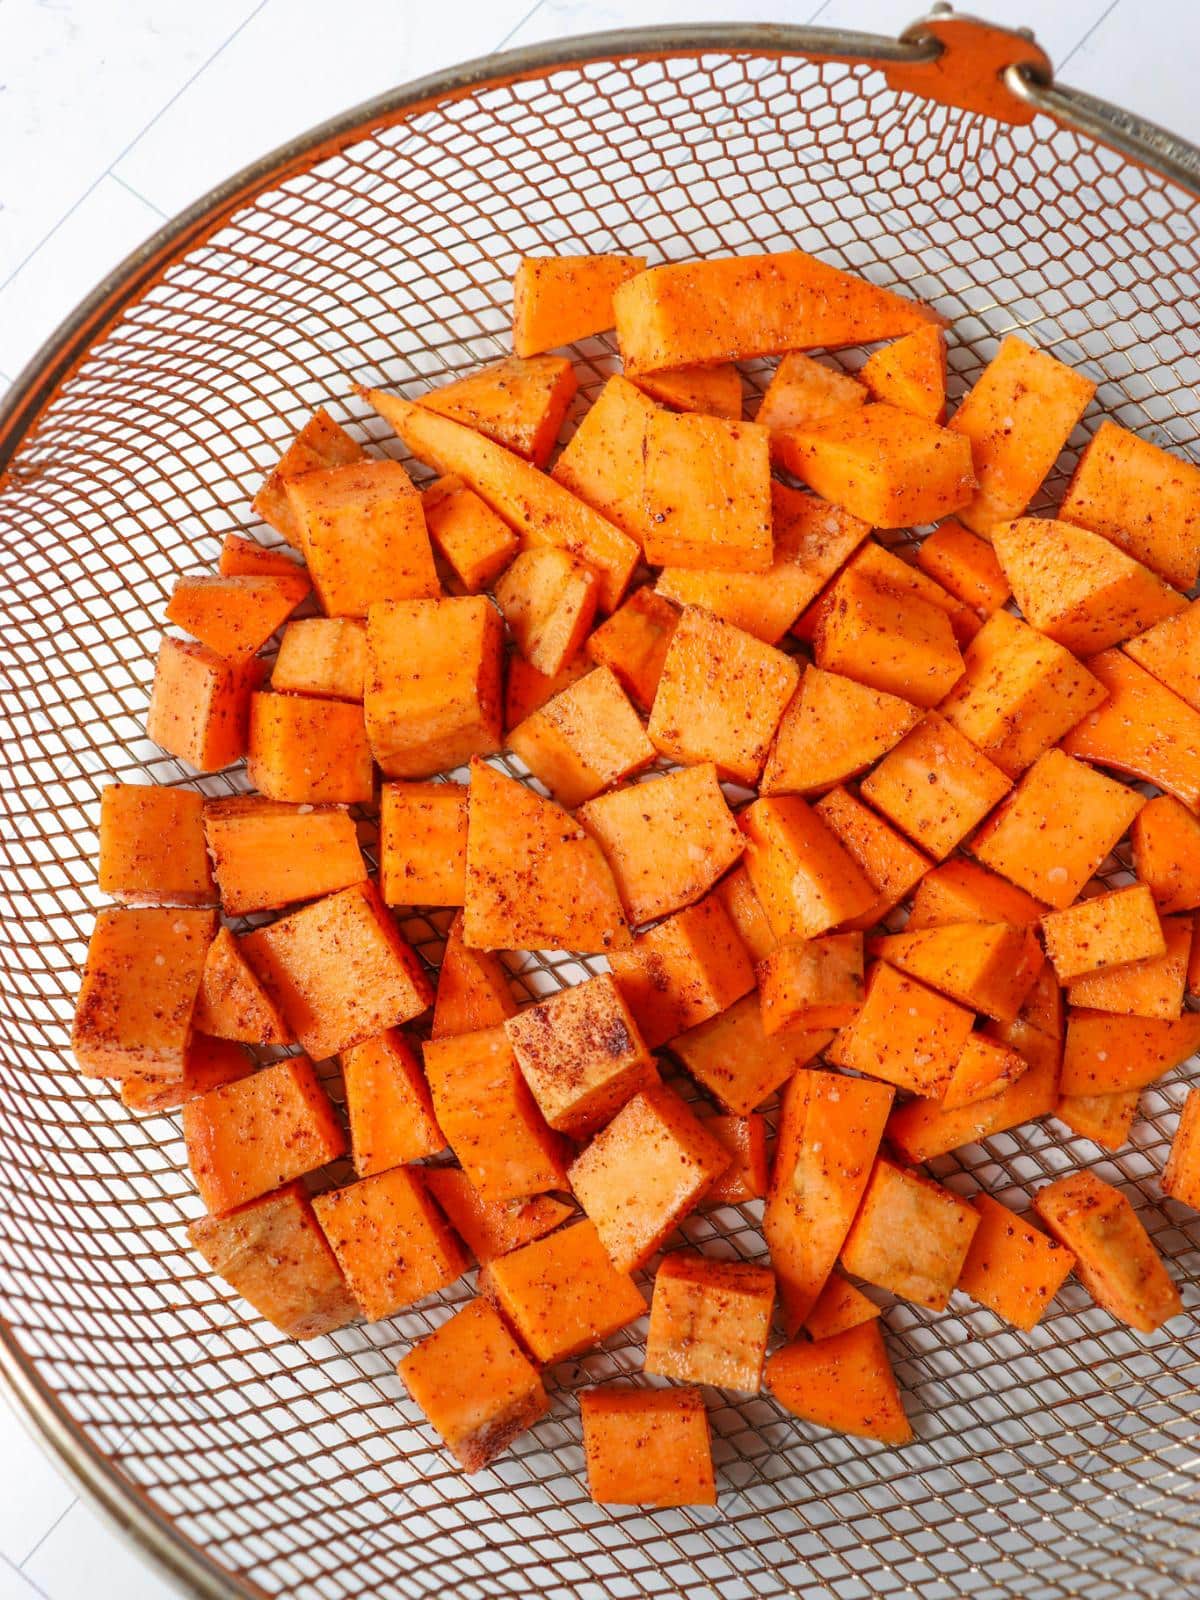 Seasoned sweet potato cubes in an air fryer basket before being air fried.